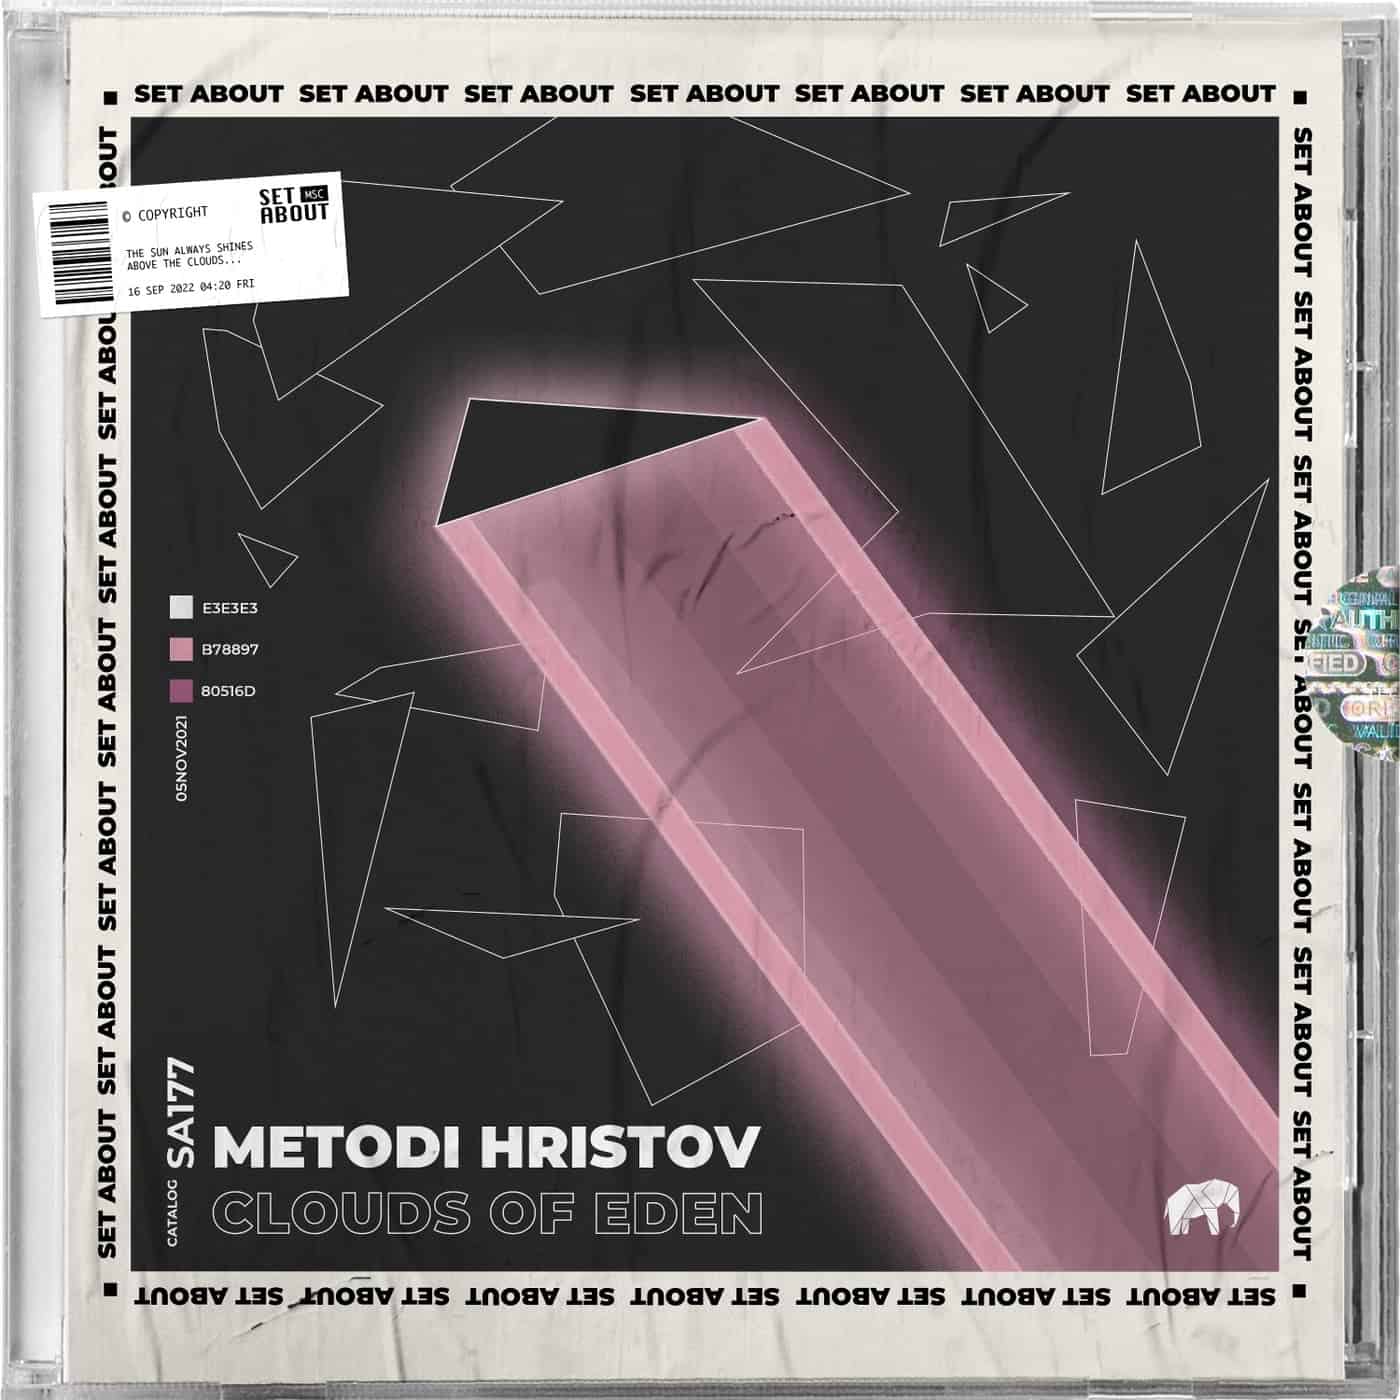 Download Metodi Hristov - Clouds of Eden